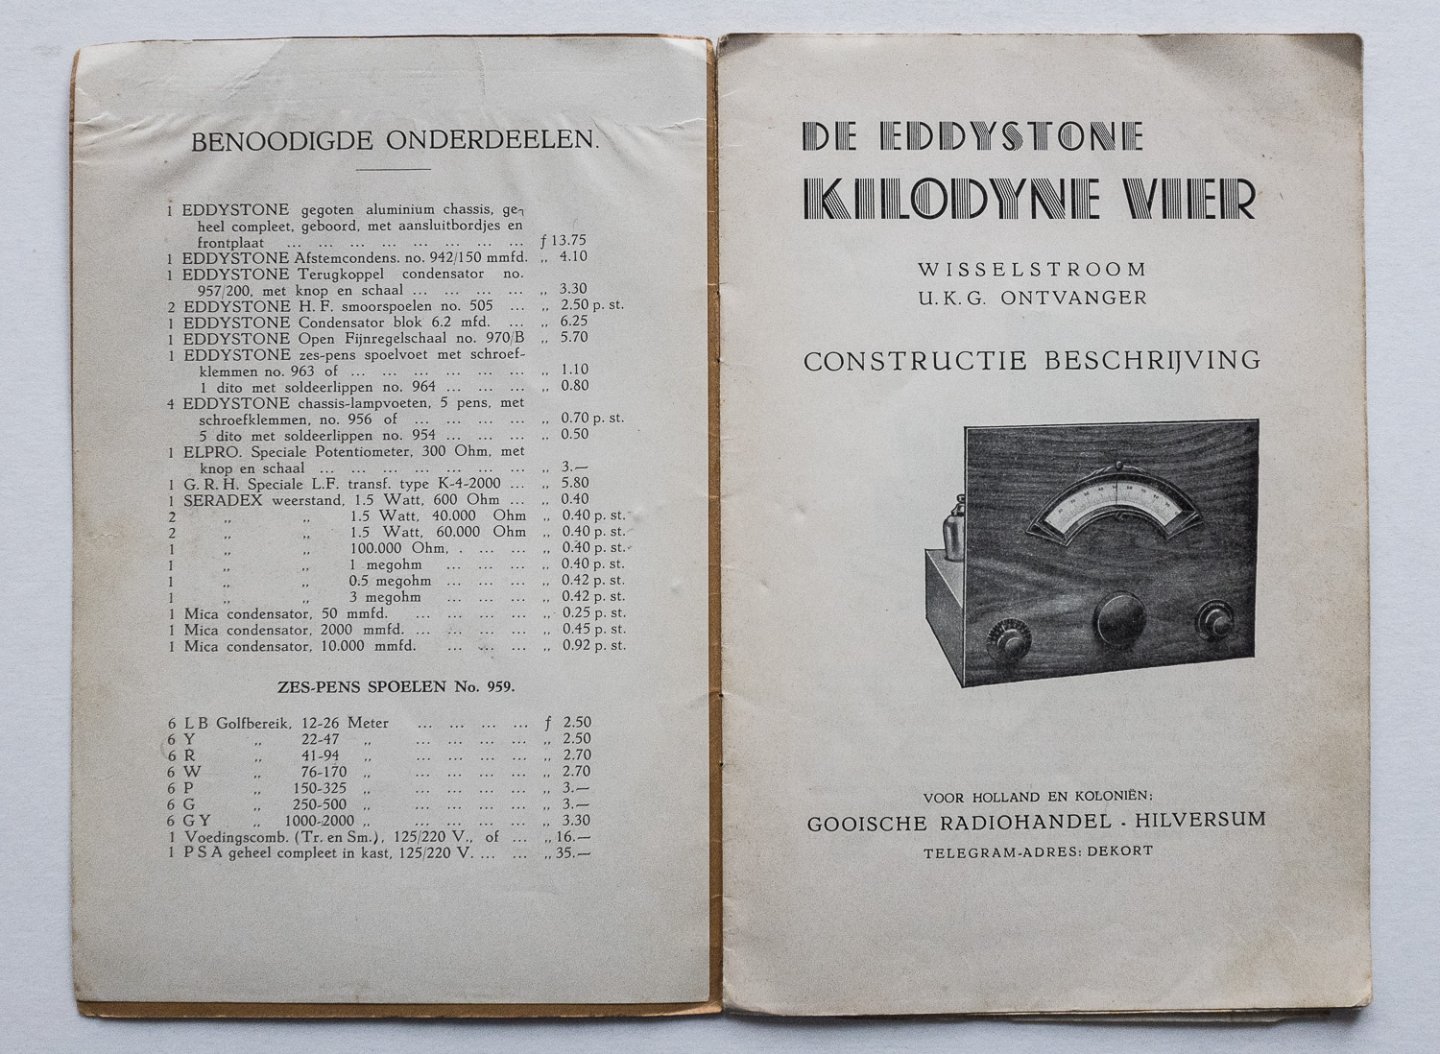  - De Eddystone Kilodyne Vier wisselstroom U.K.G. ontvanger - constructie beschrijving